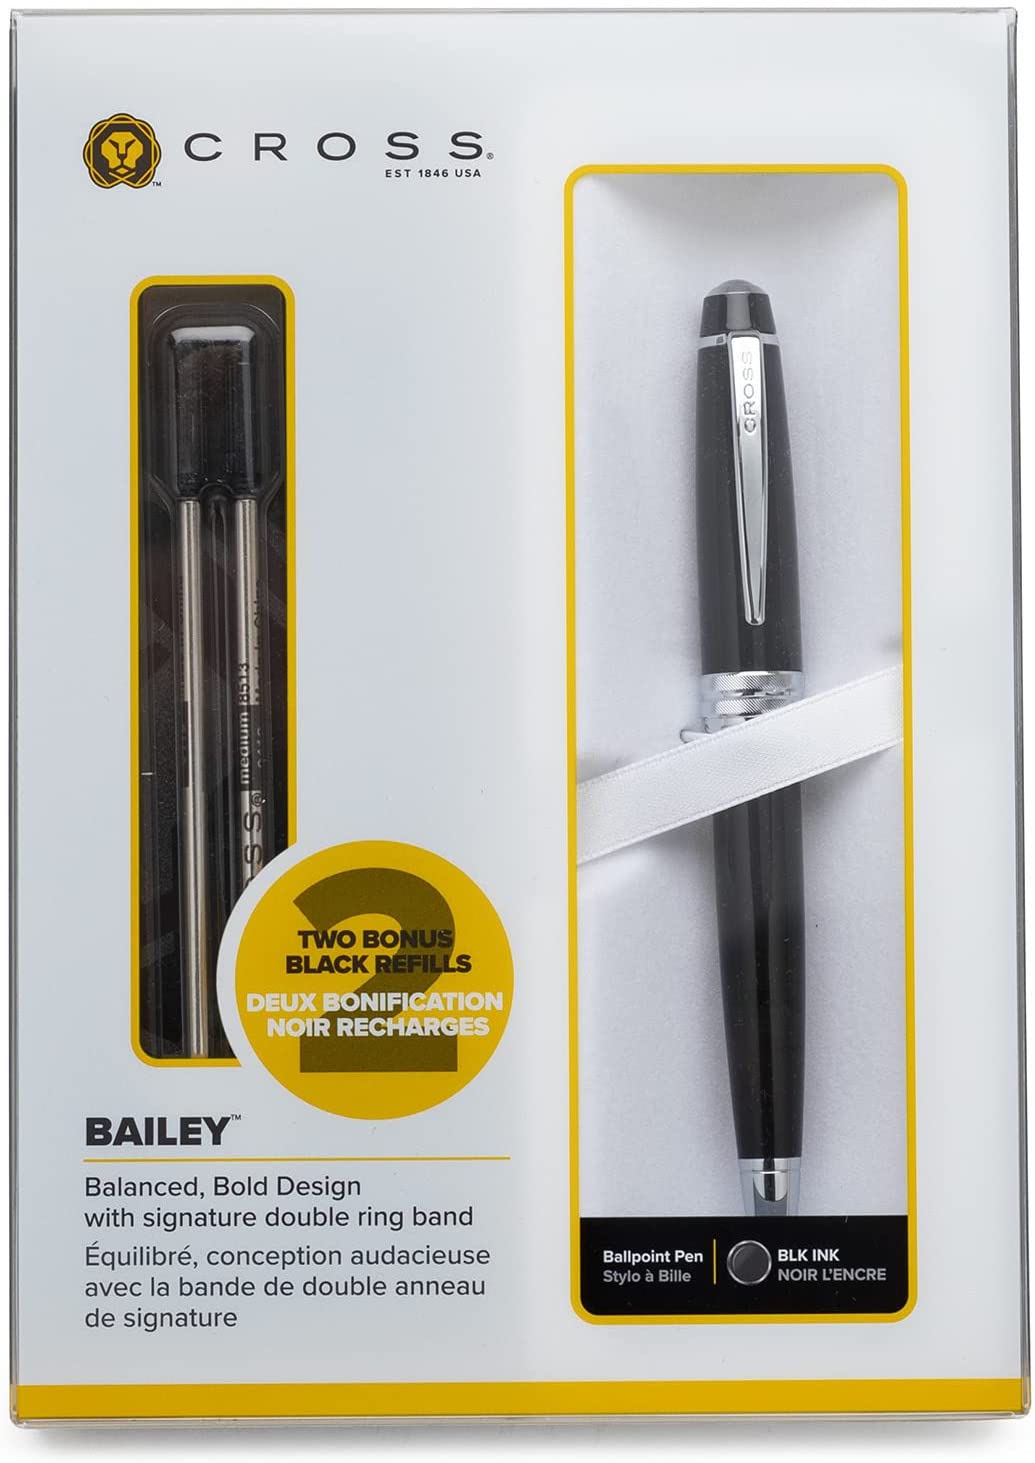 Cross Bailey Ballpoint Pen with Refills sale | Altman Luggage New York